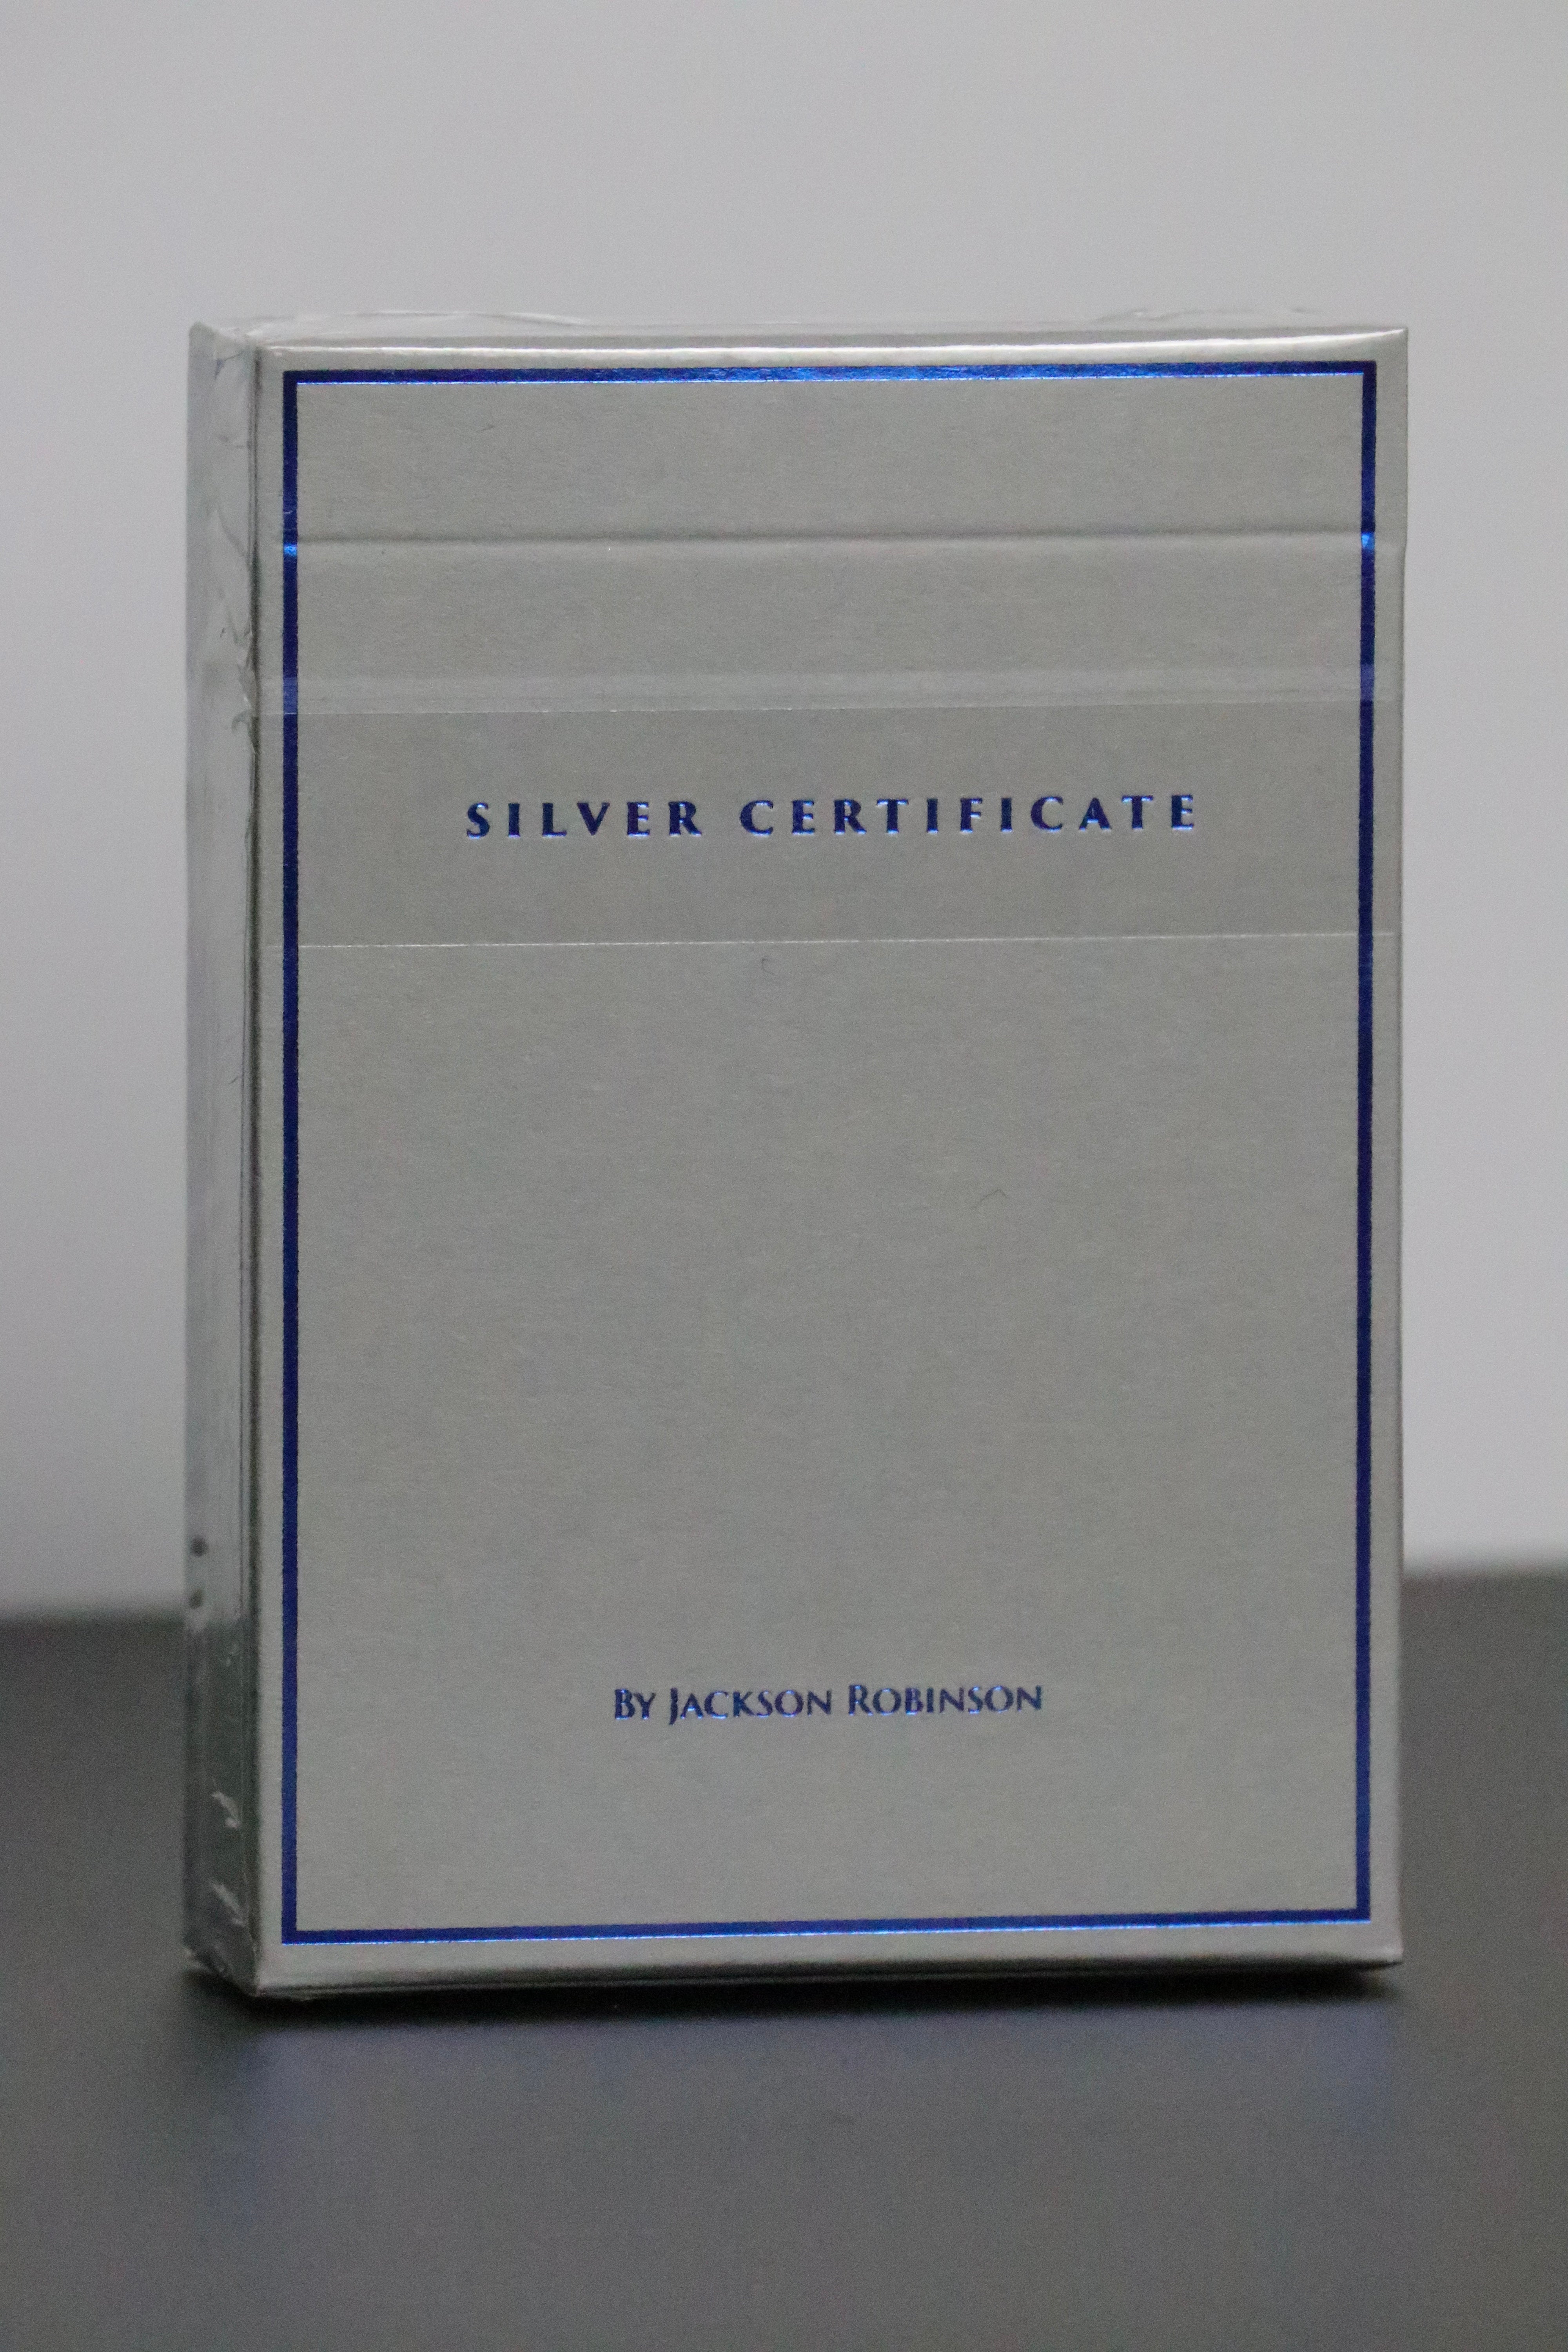 Silver Certificate 2021